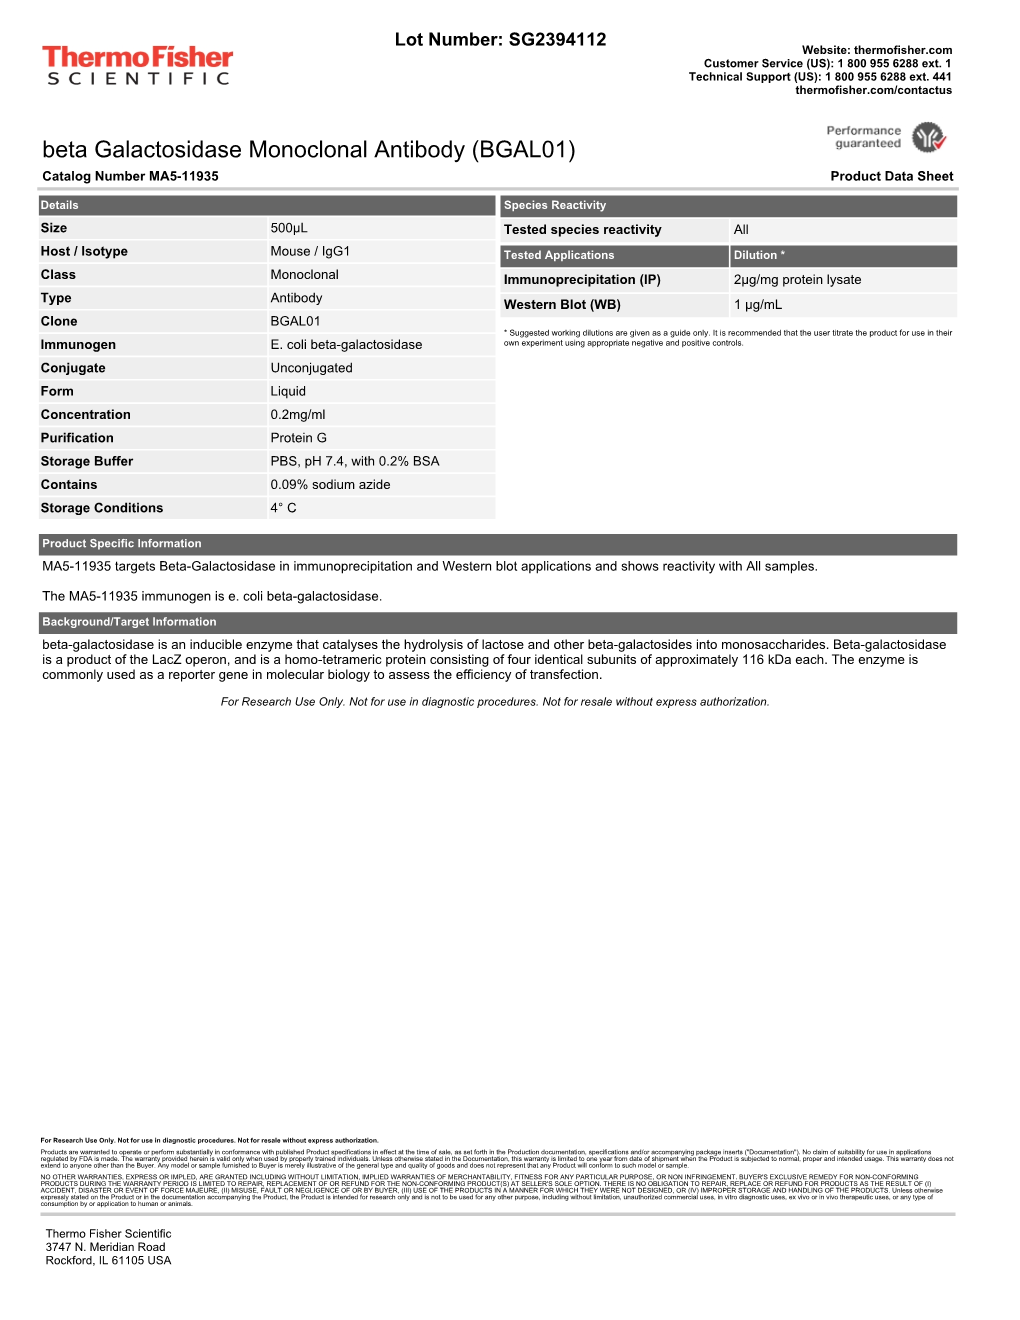 Beta Galactosidase Monoclonal Antibody (BGAL01) Catalog Number MA5-11935 Product Data Sheet